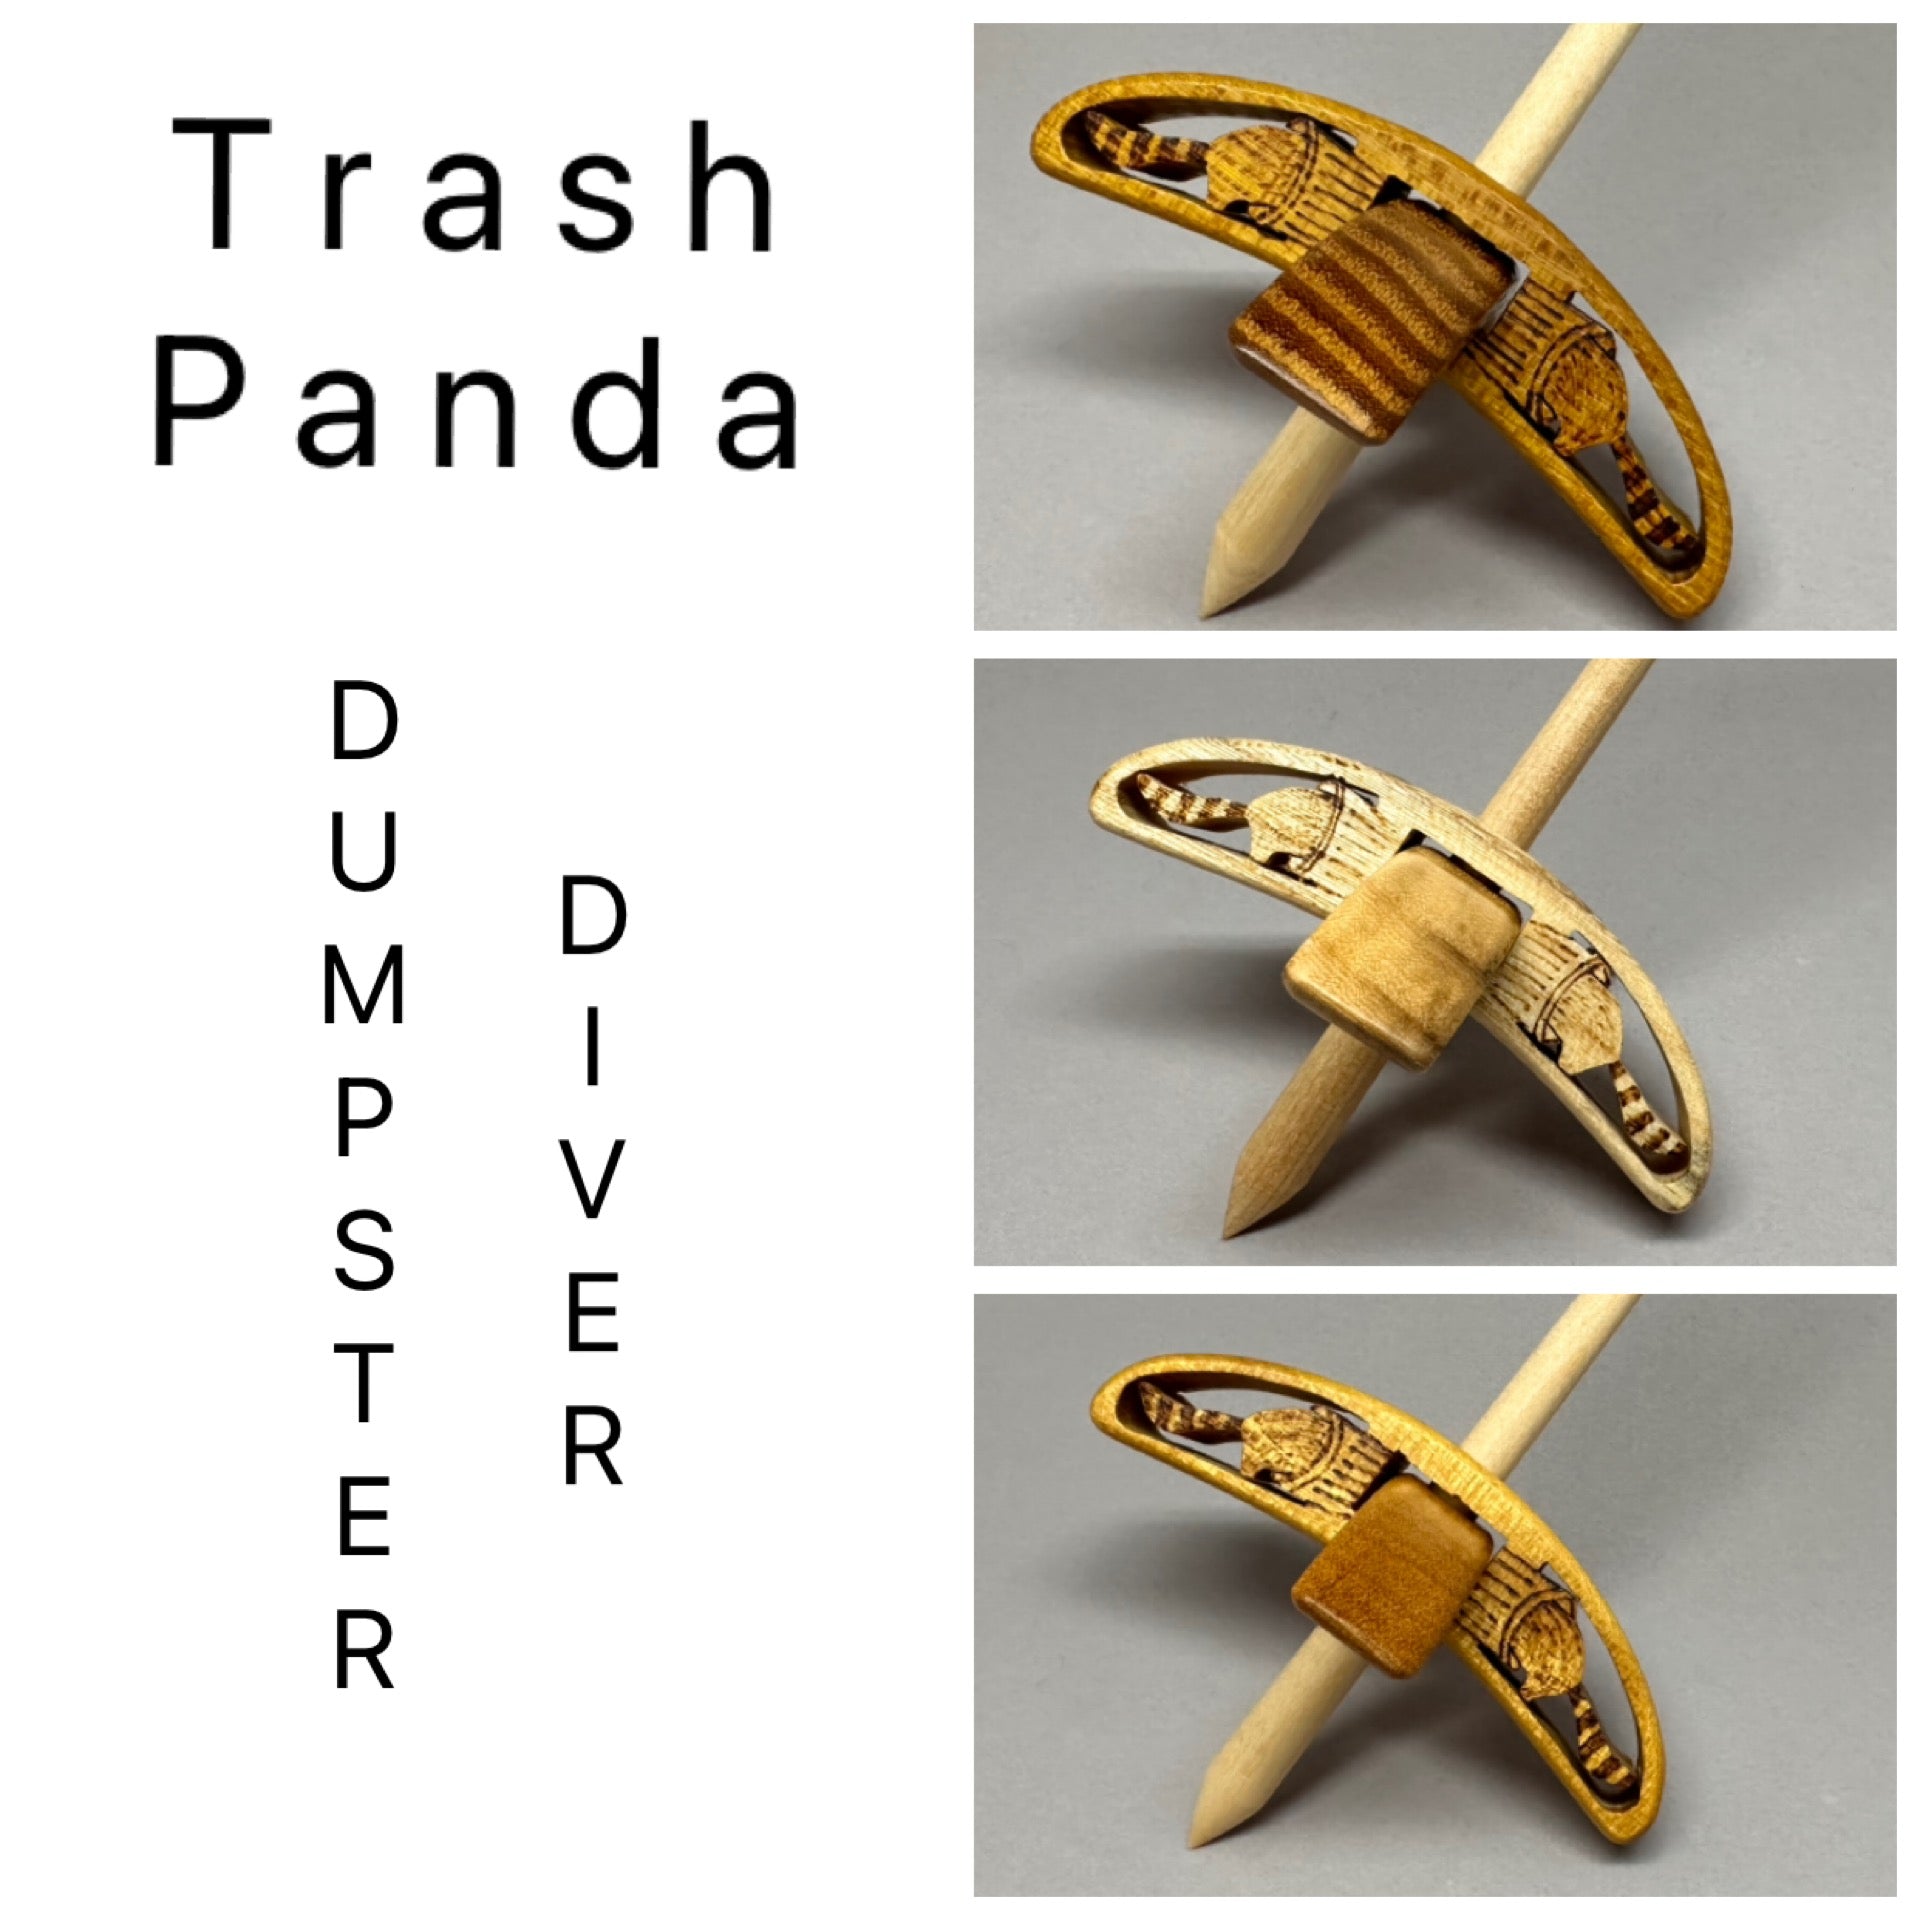 Std Scrolled Turk™ - Trash Panda DUMPSTER DIVER